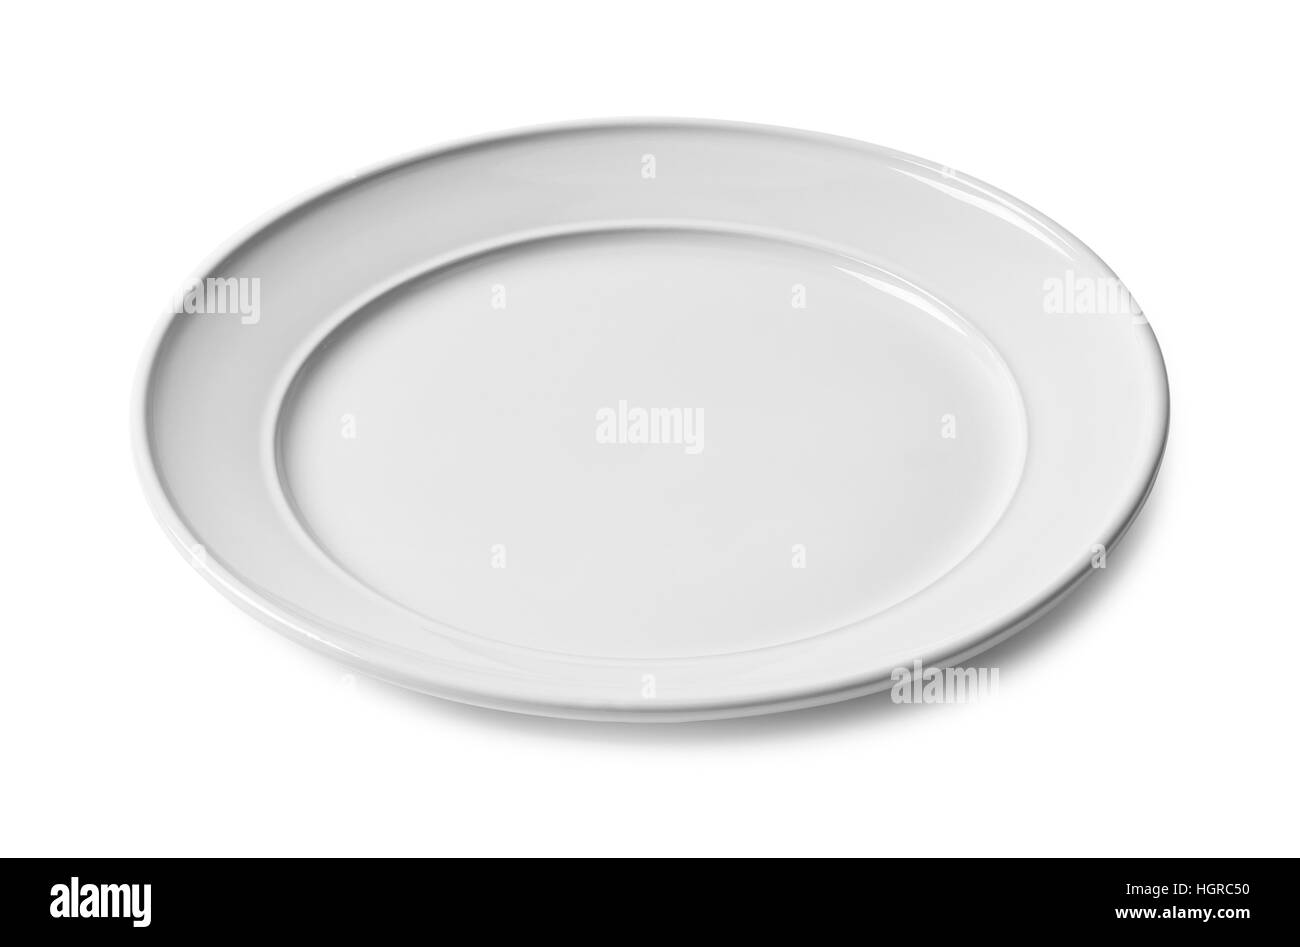 Empty White Ceramic Plate Isolated on White Background. Stock Photo